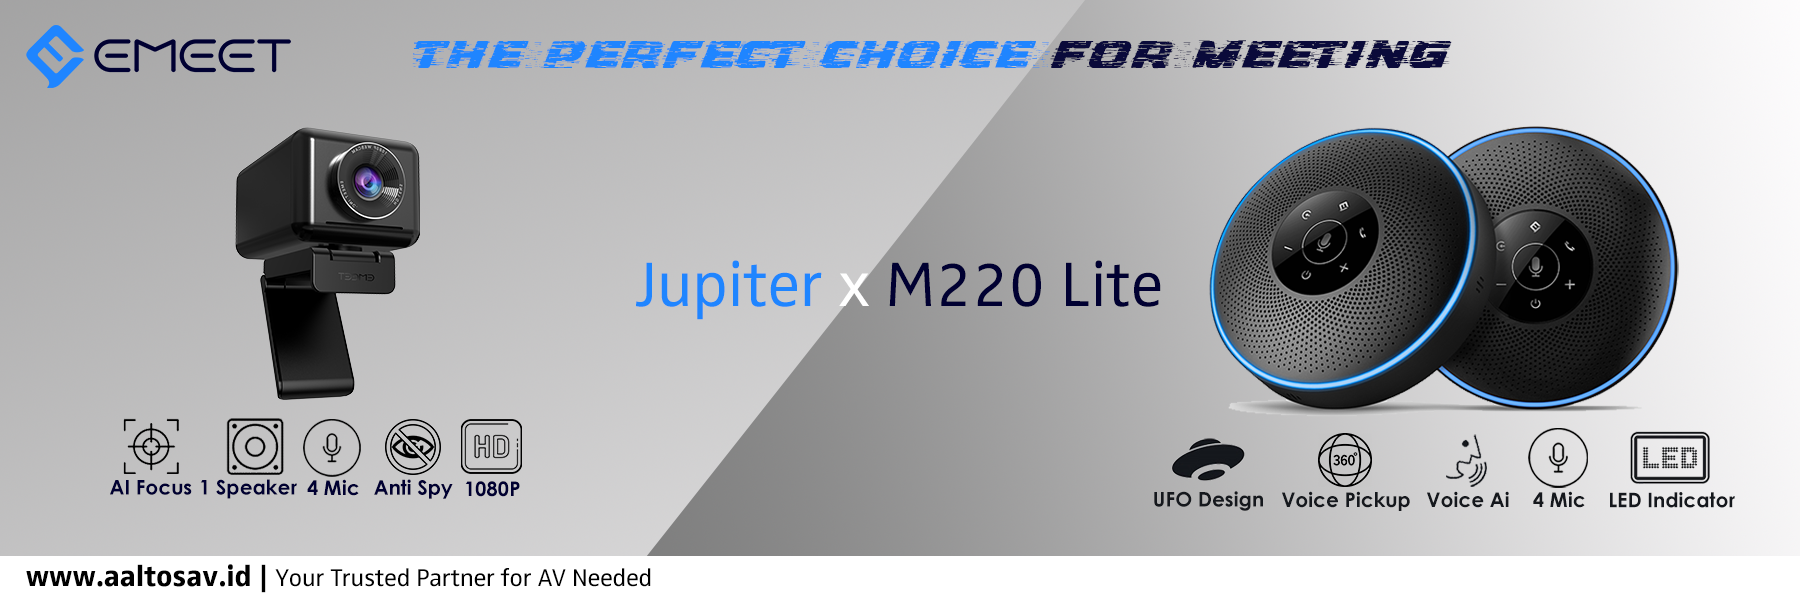 eMeet Jupiter X M220 Lite